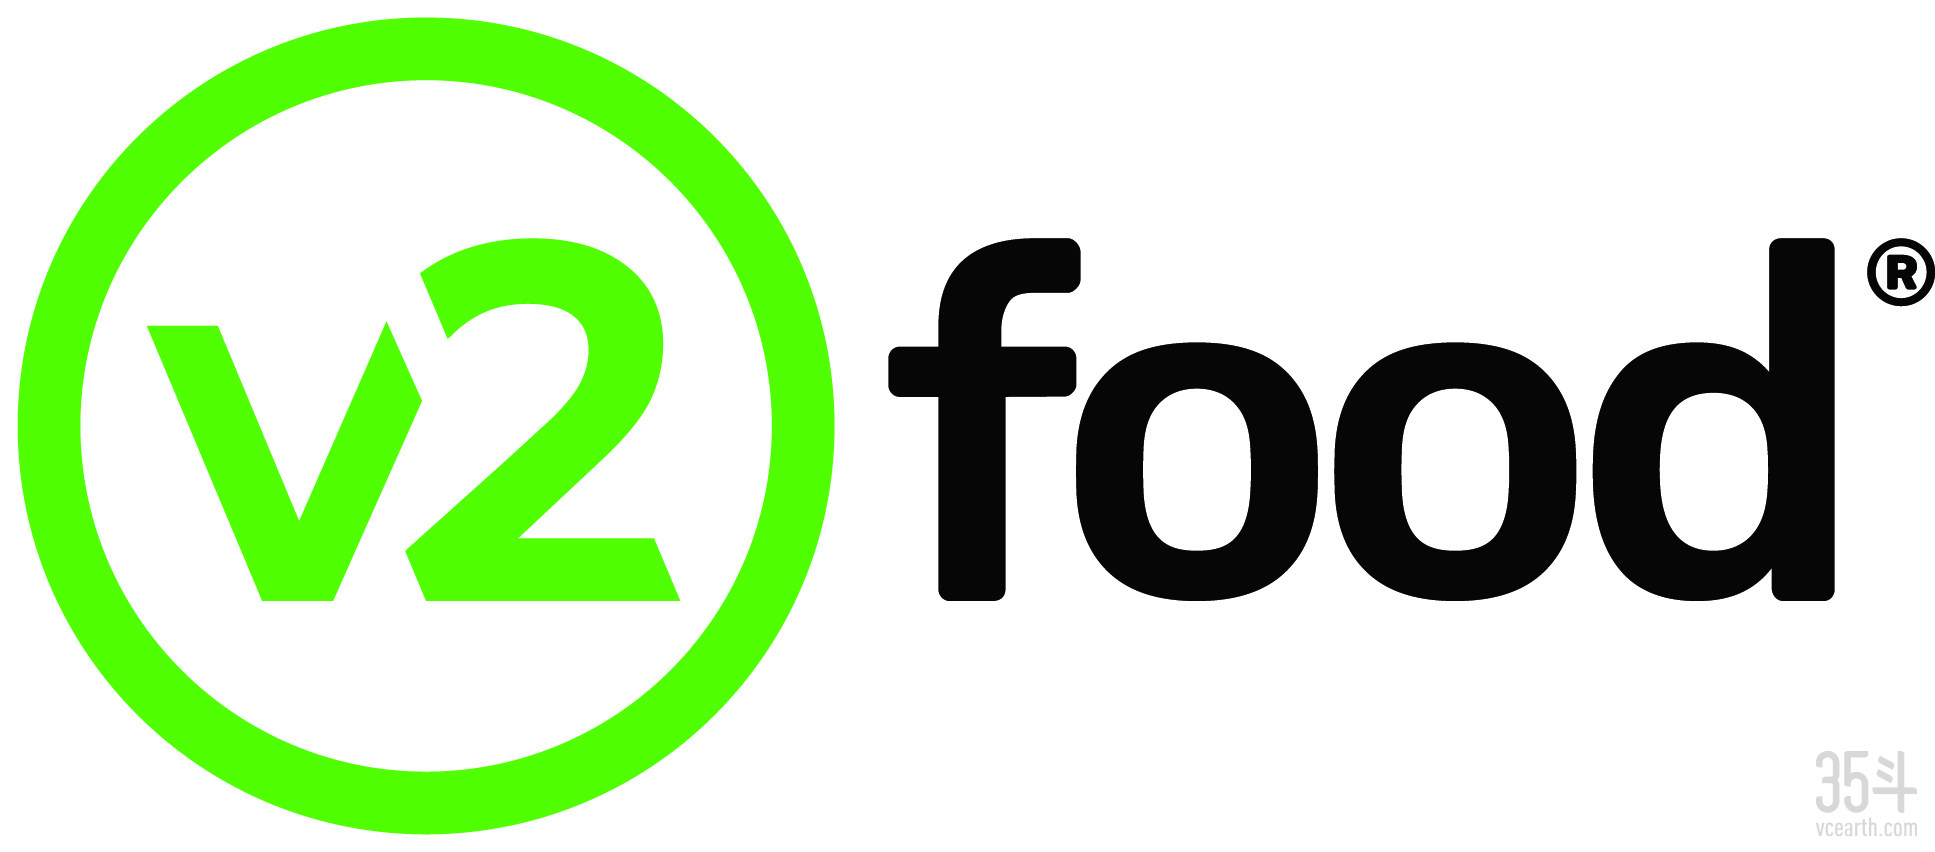 v2food_logo.jpg